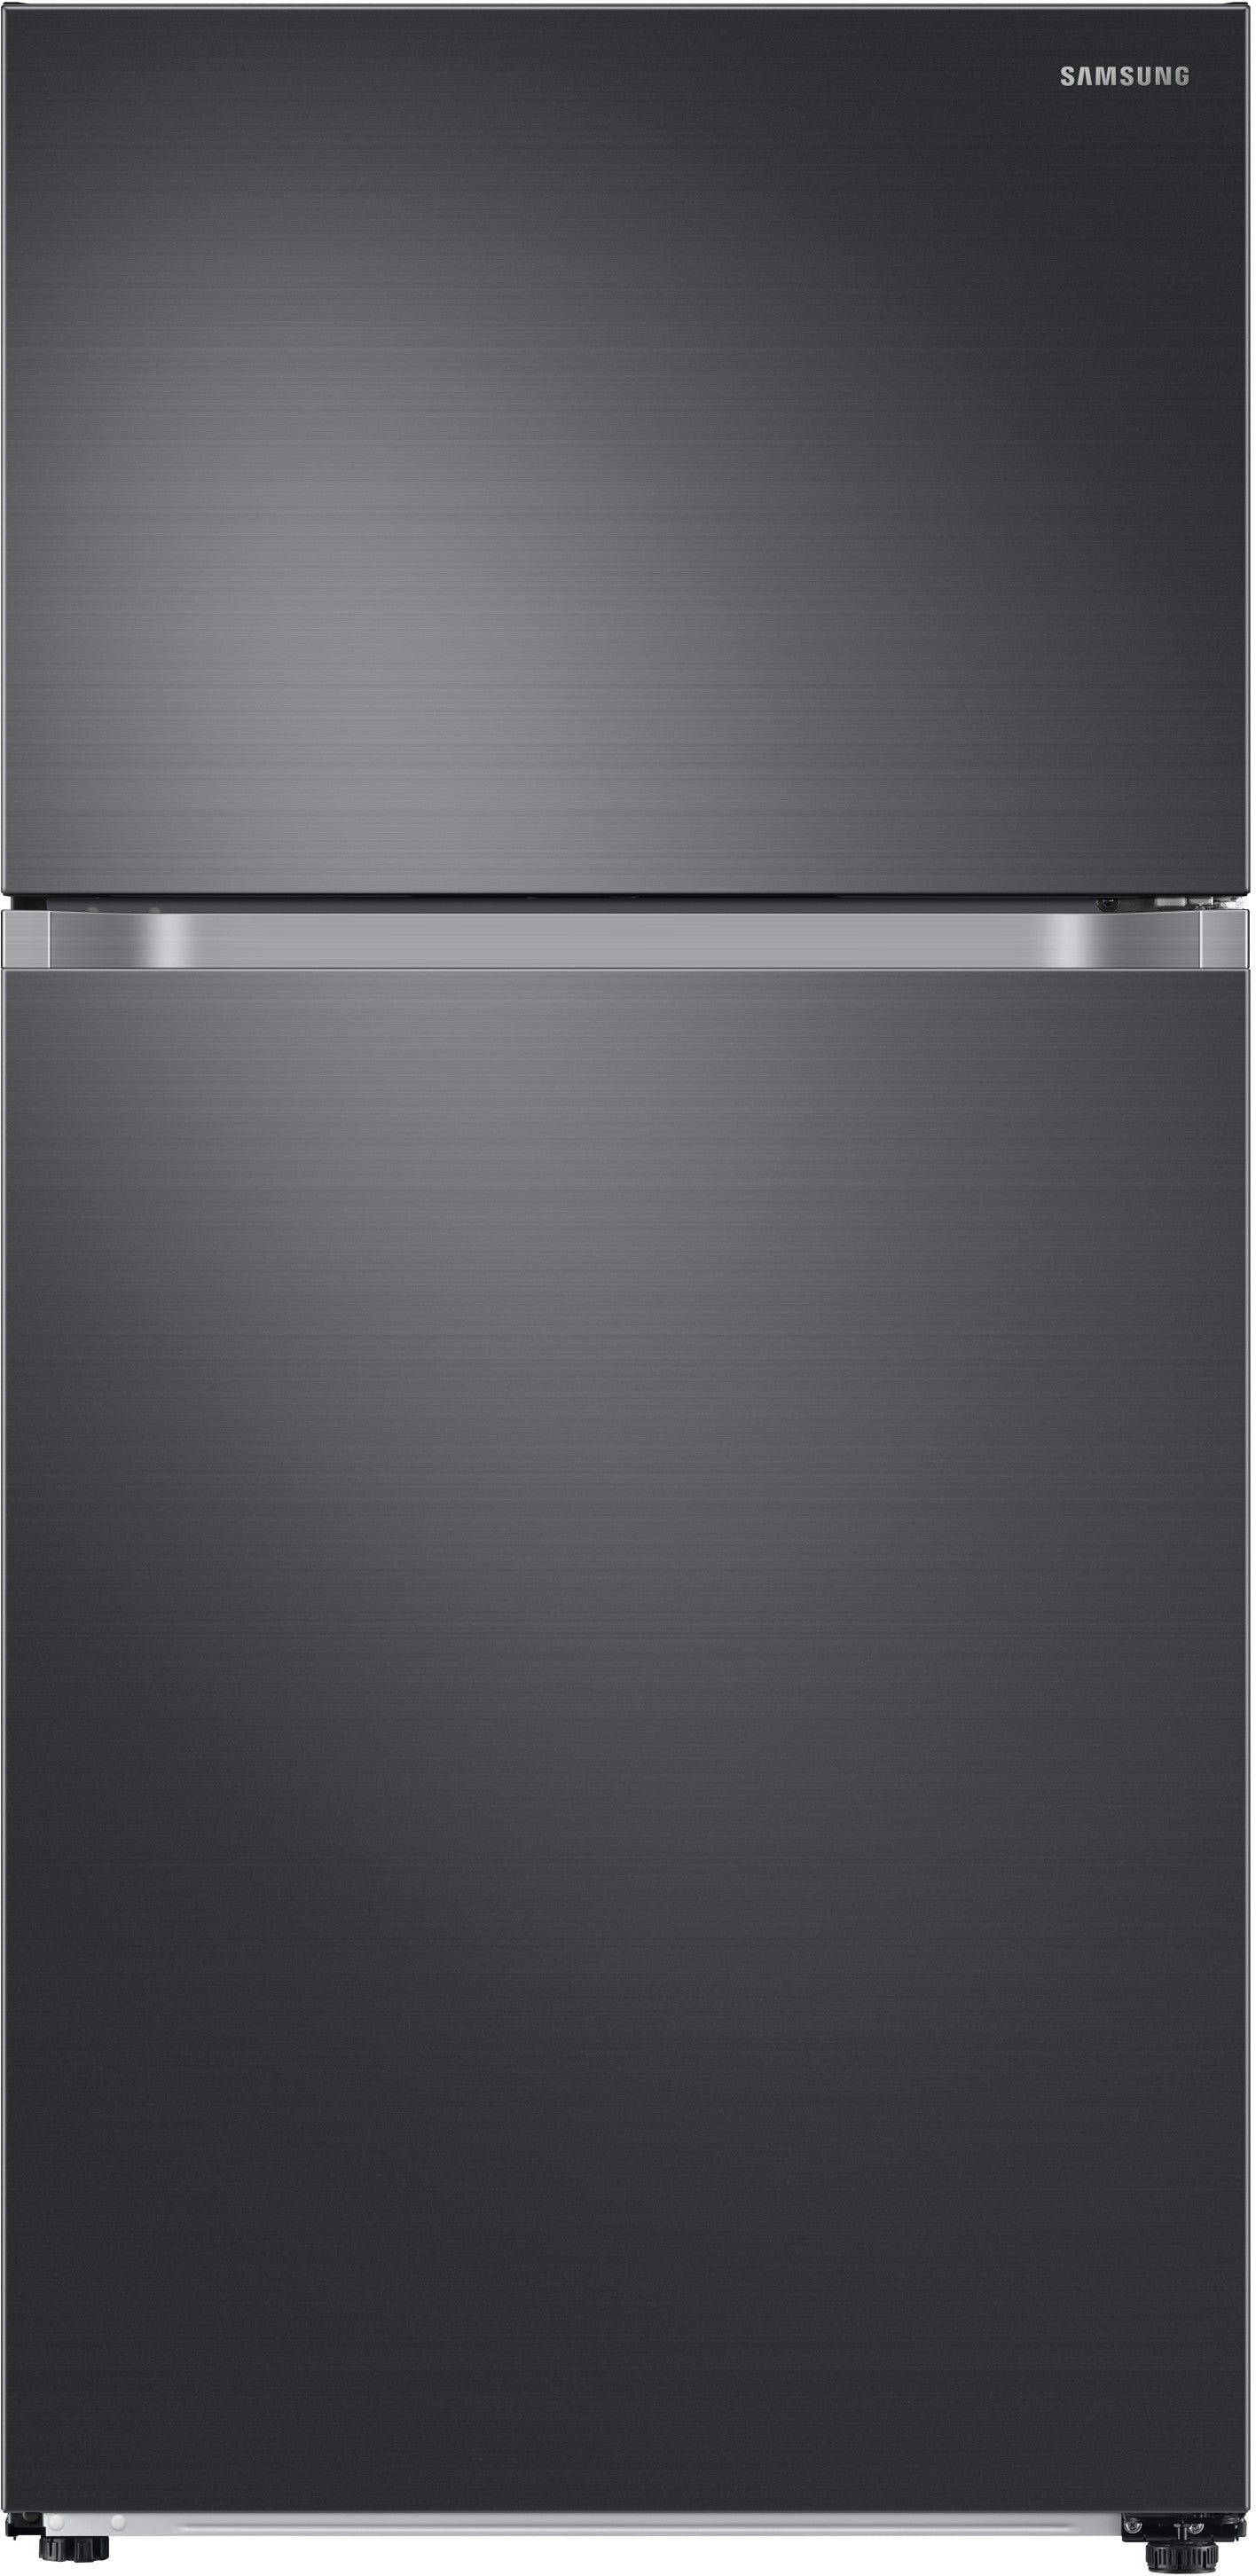 Samsung RT21M6215SG/AA 21.1 Cu. Ft. Top-freezer Refrigerator